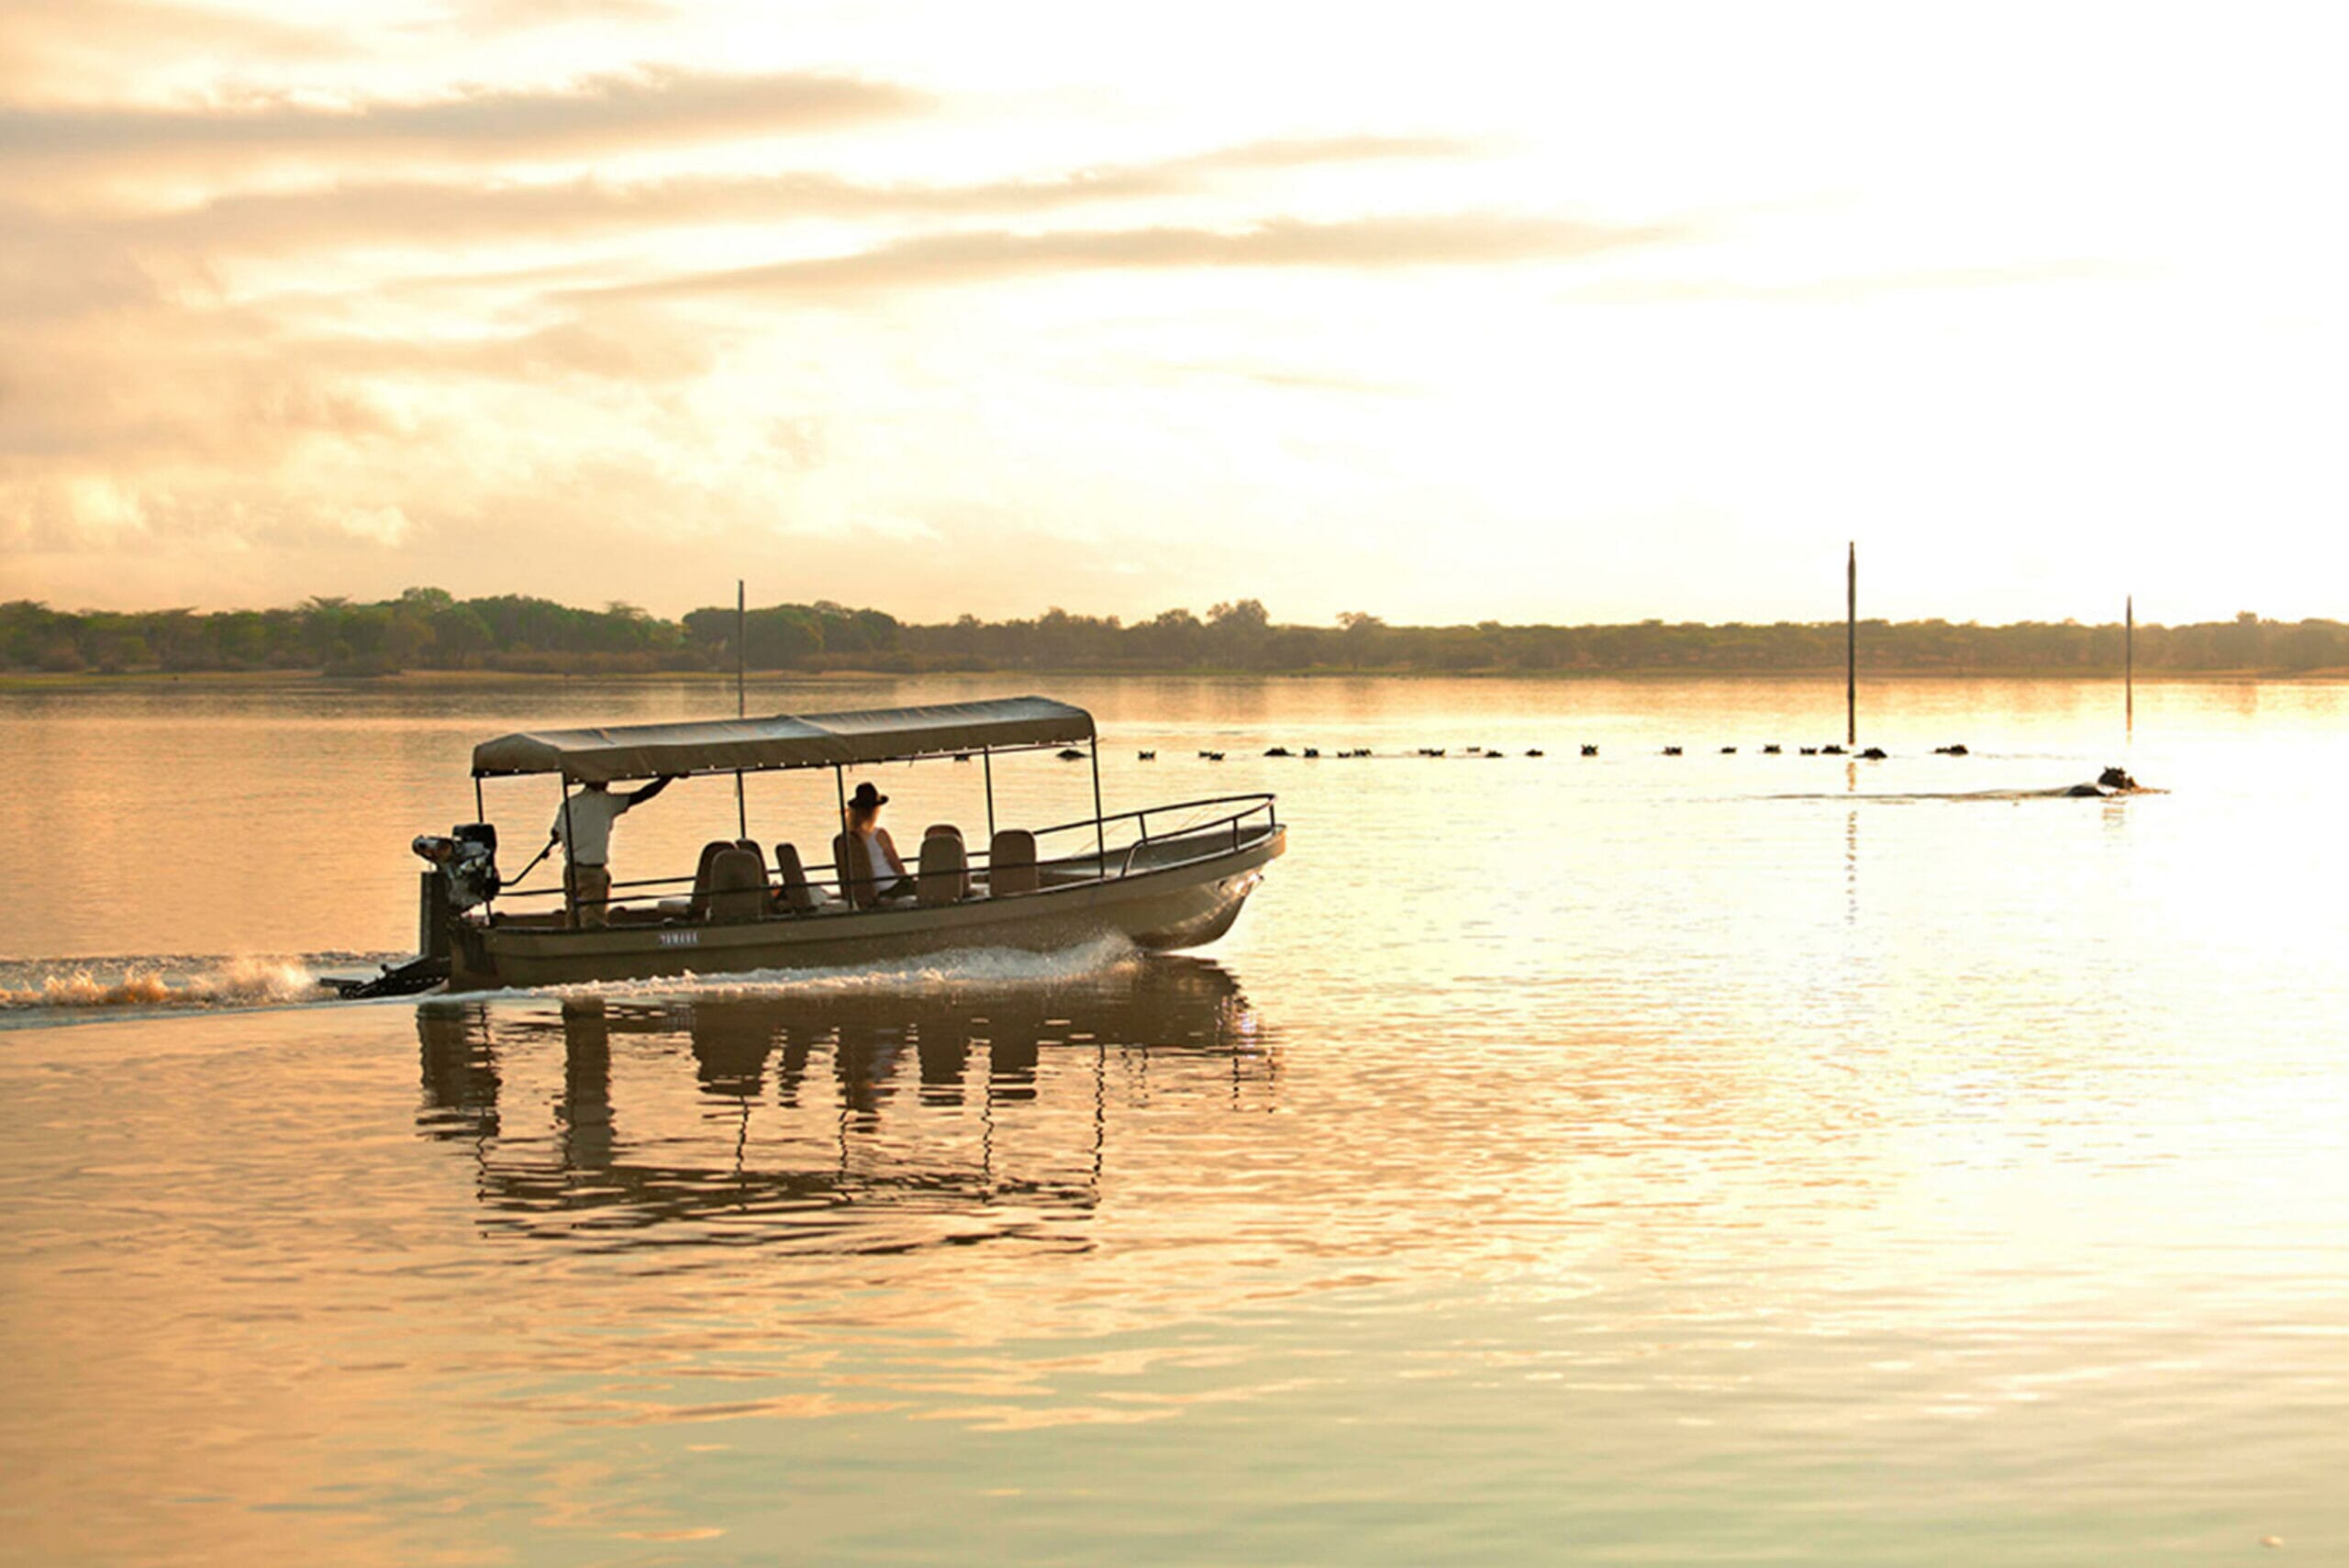 Roho-ya-Selous-Boating-safari-at-sunset-scaled